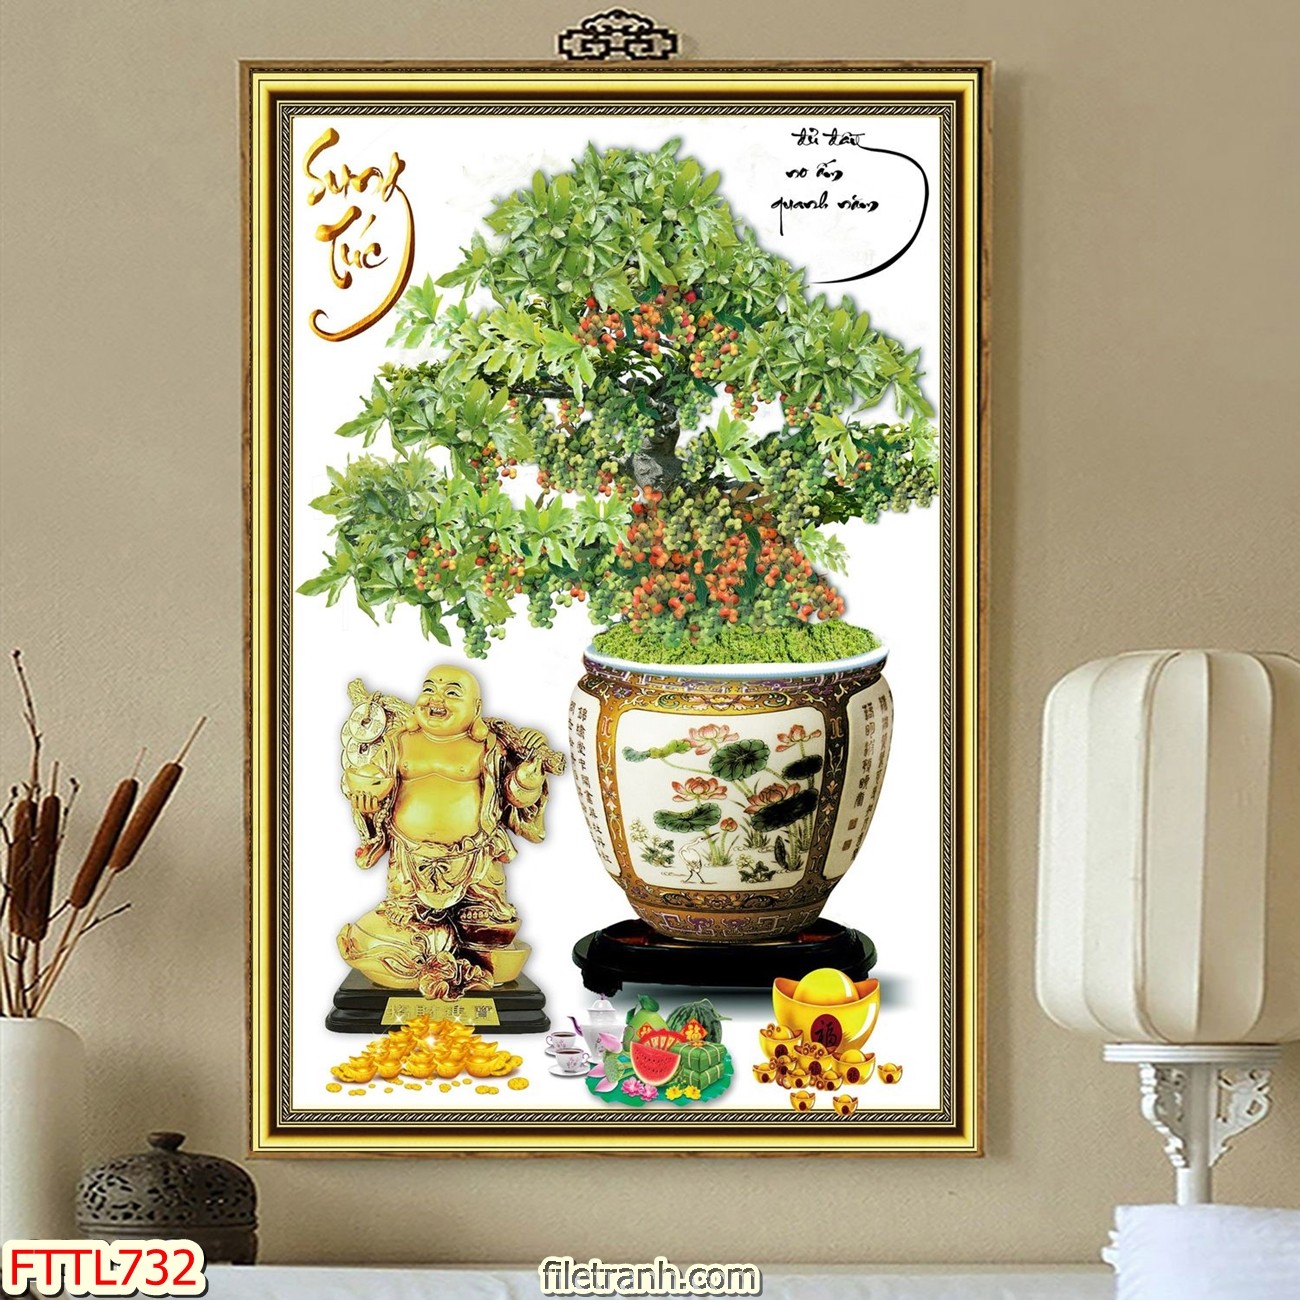 https://filetranh.com/file-tranh-chau-mai-bonsai/file-tranh-chau-mai-bonsai-fttl732.html